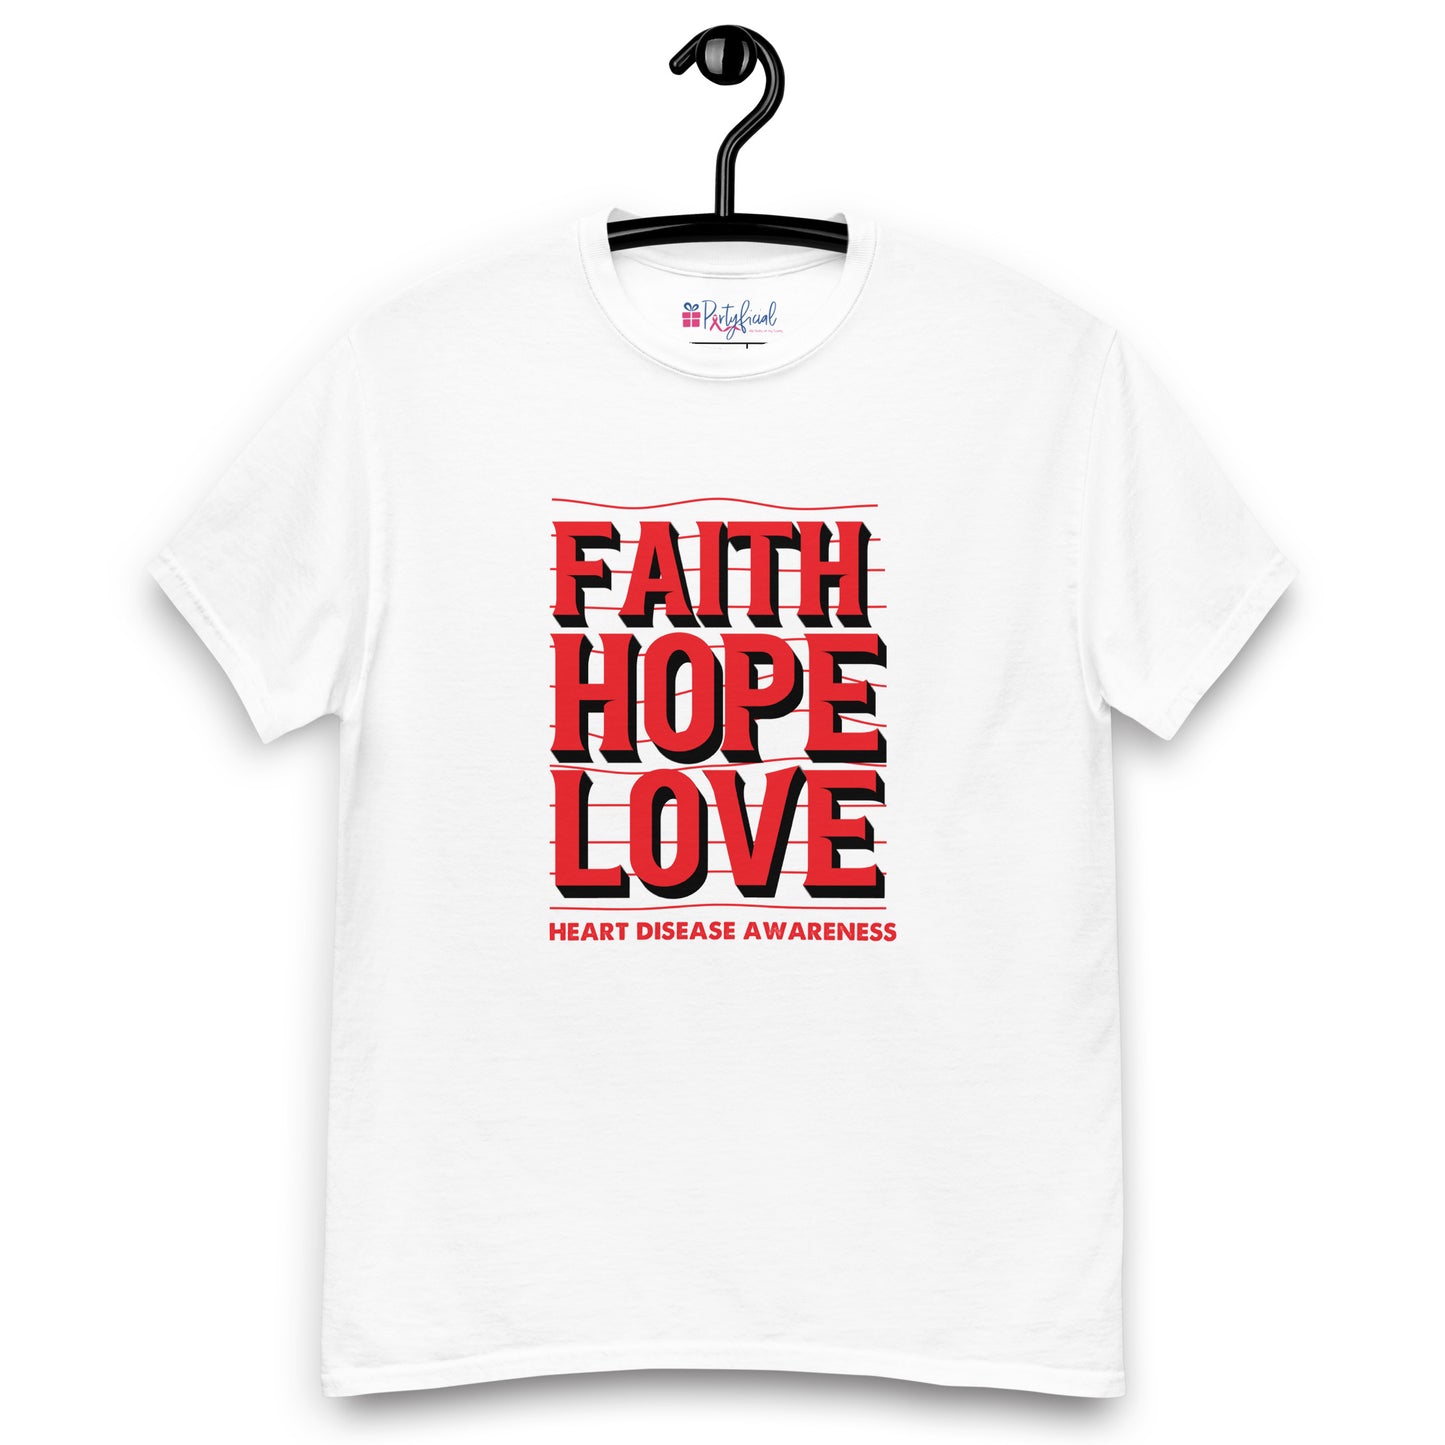 Faith Hope Love Heart Disease Awareness tee